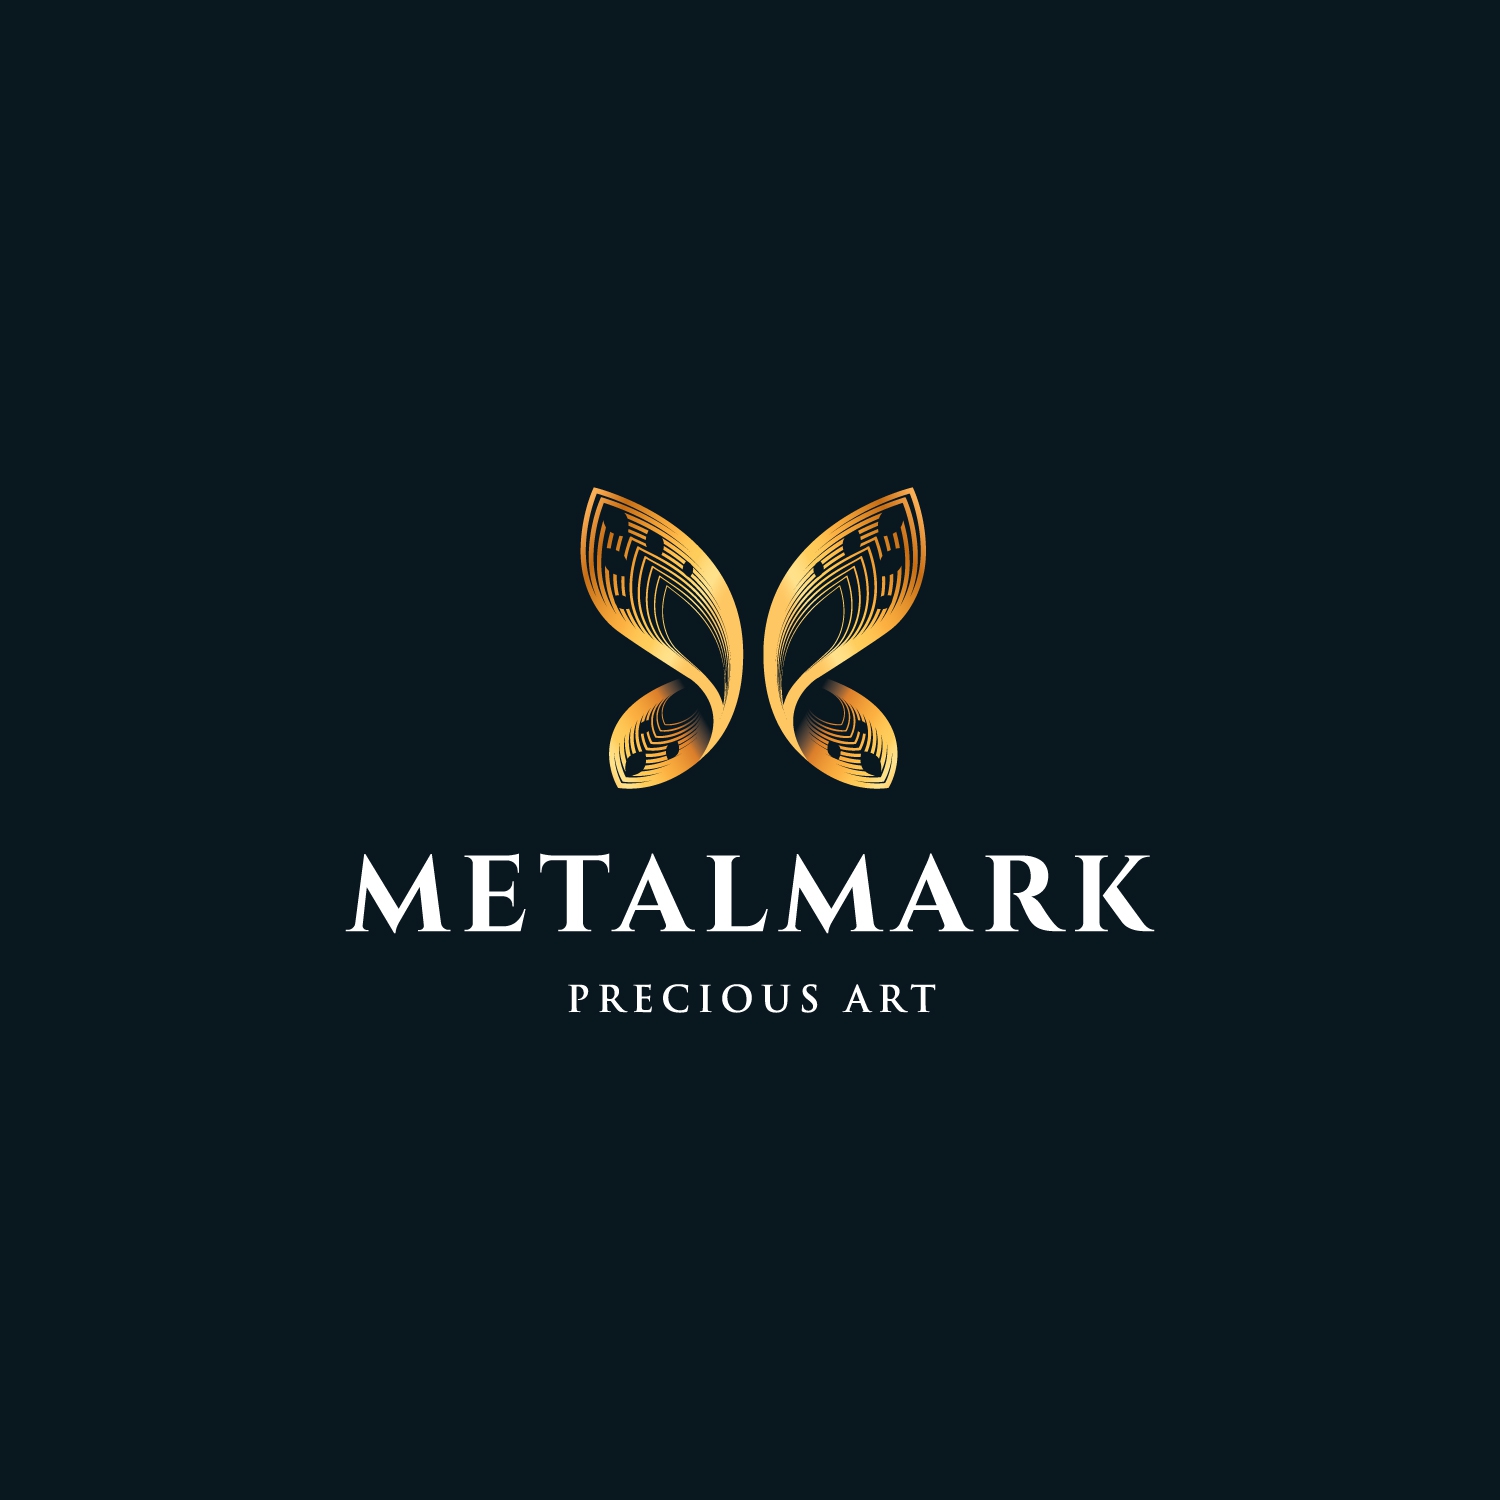 Logo Design: Metalmark - A striking and memorable logo design for Metalmark, combining elegance with industrial elements.